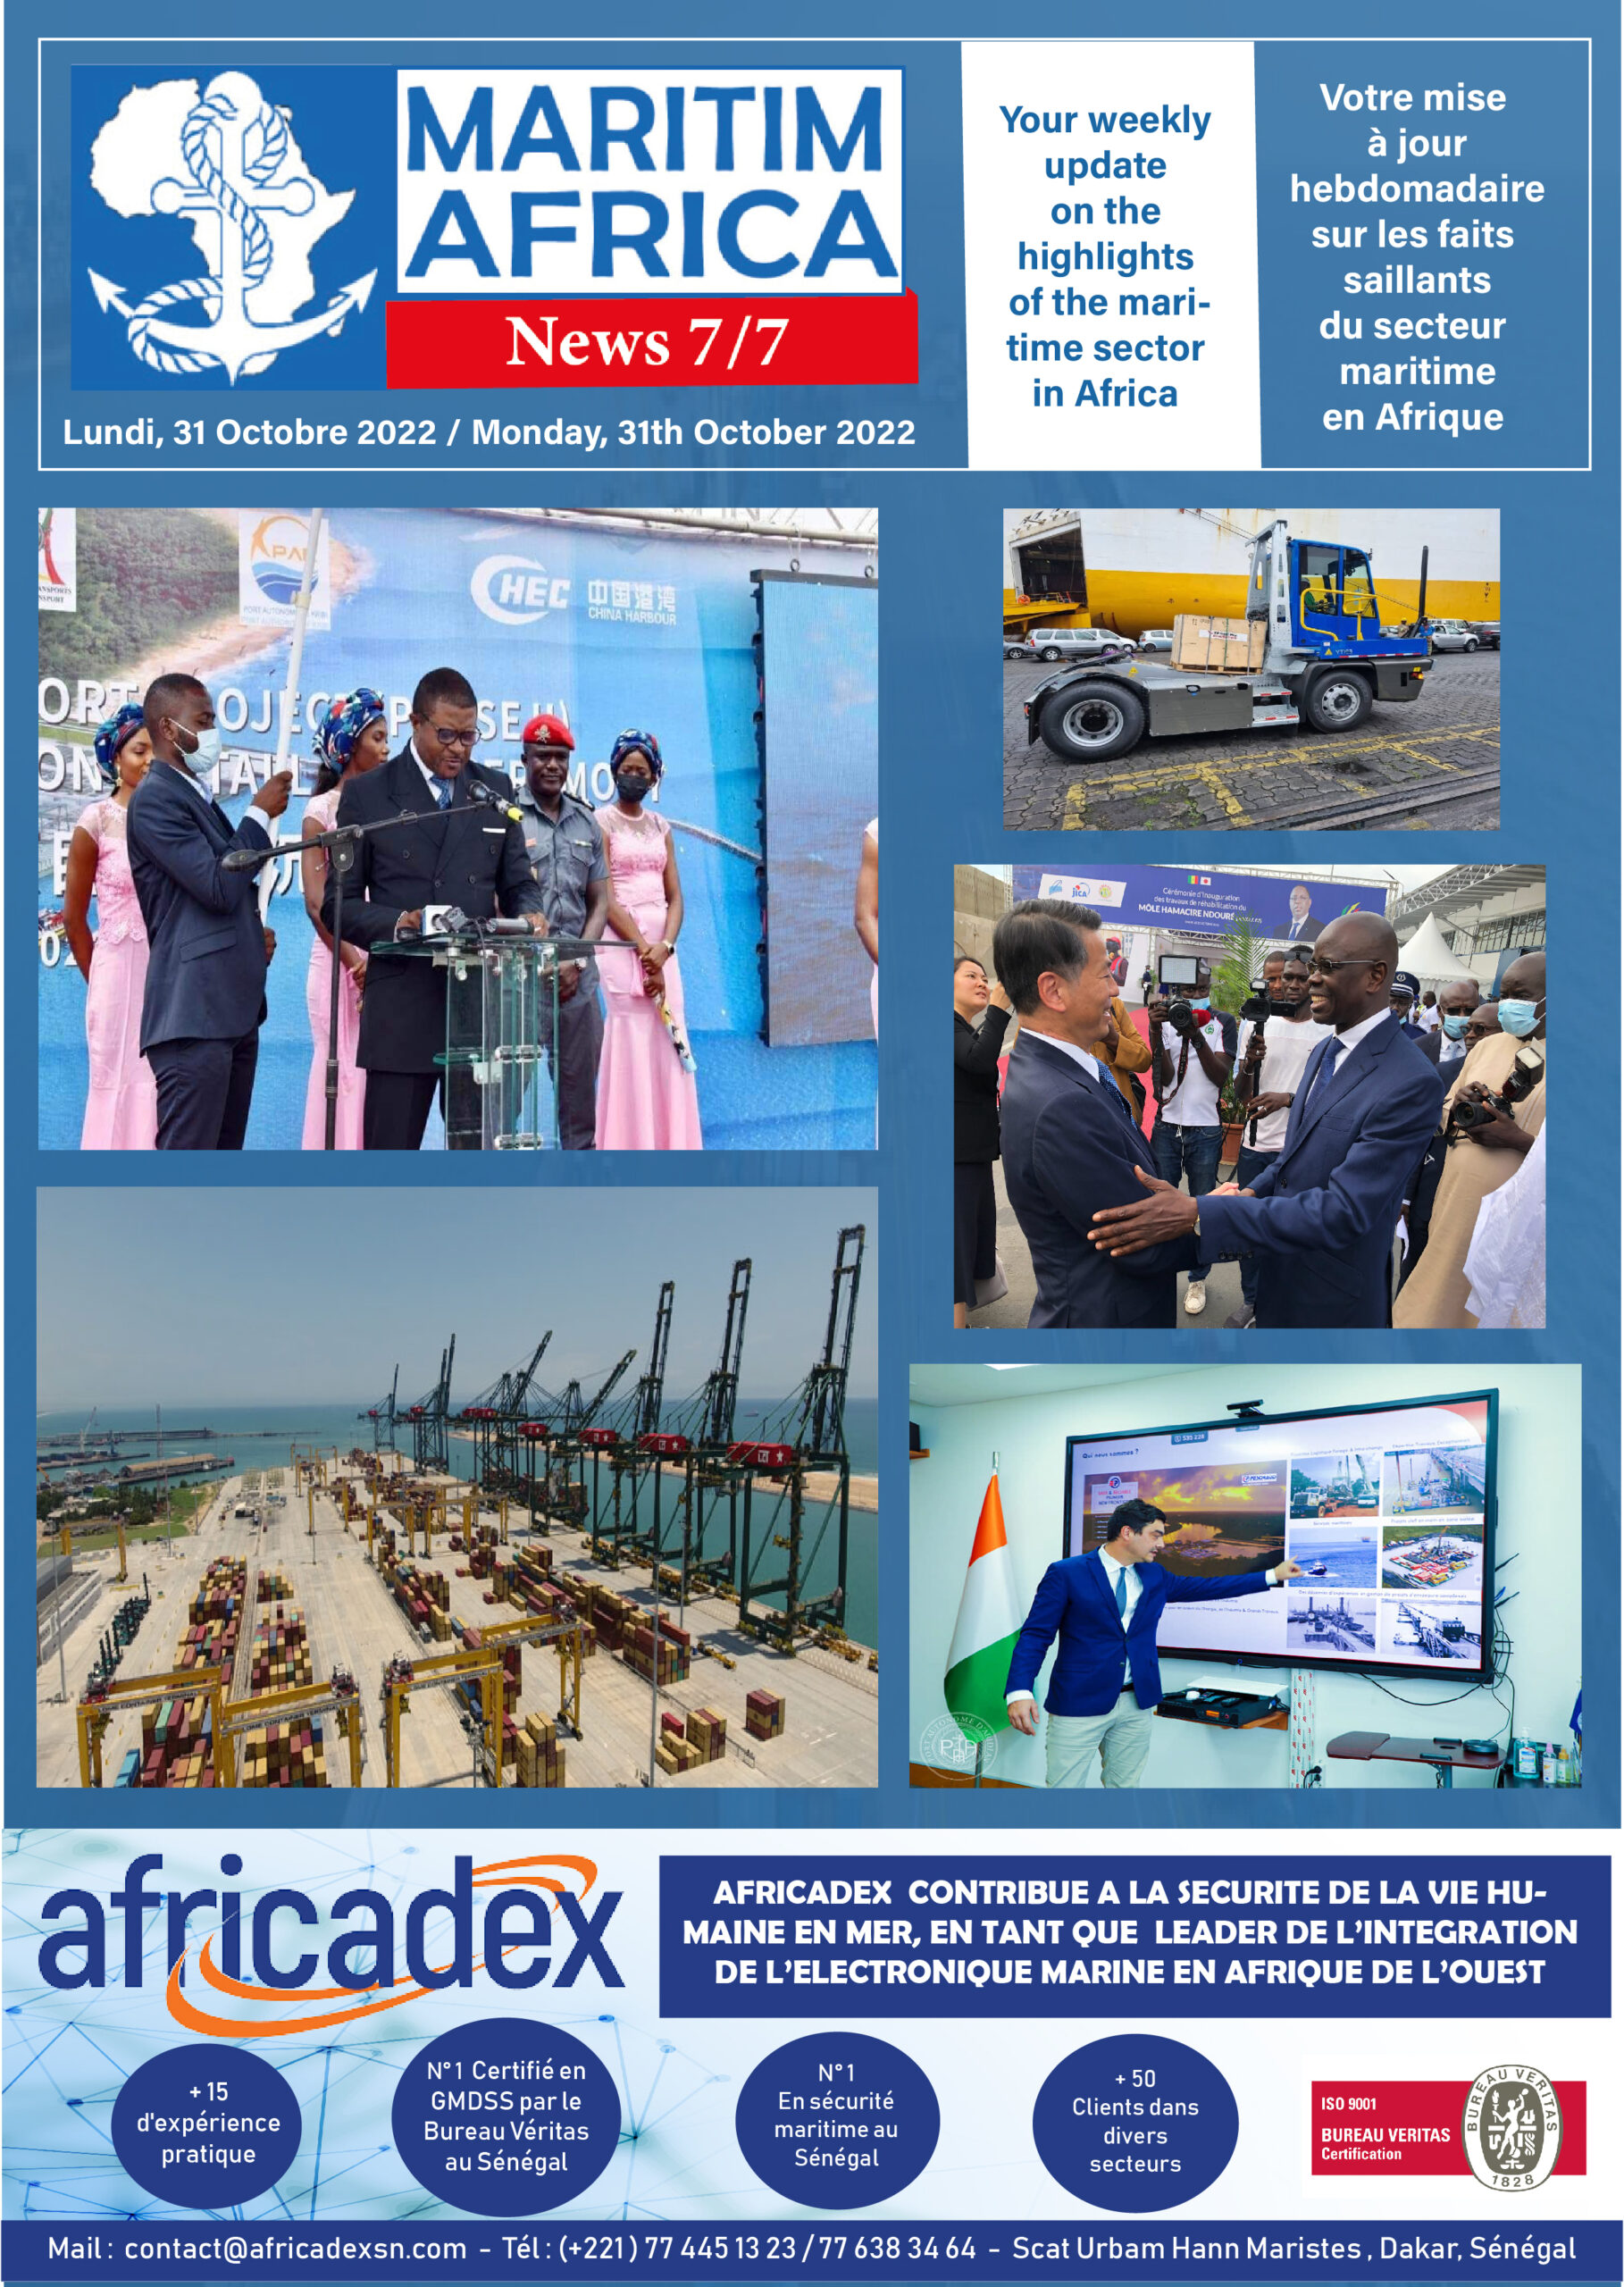 Maritimafrica News 7/7 (Week of 24 – 30 october 2022)